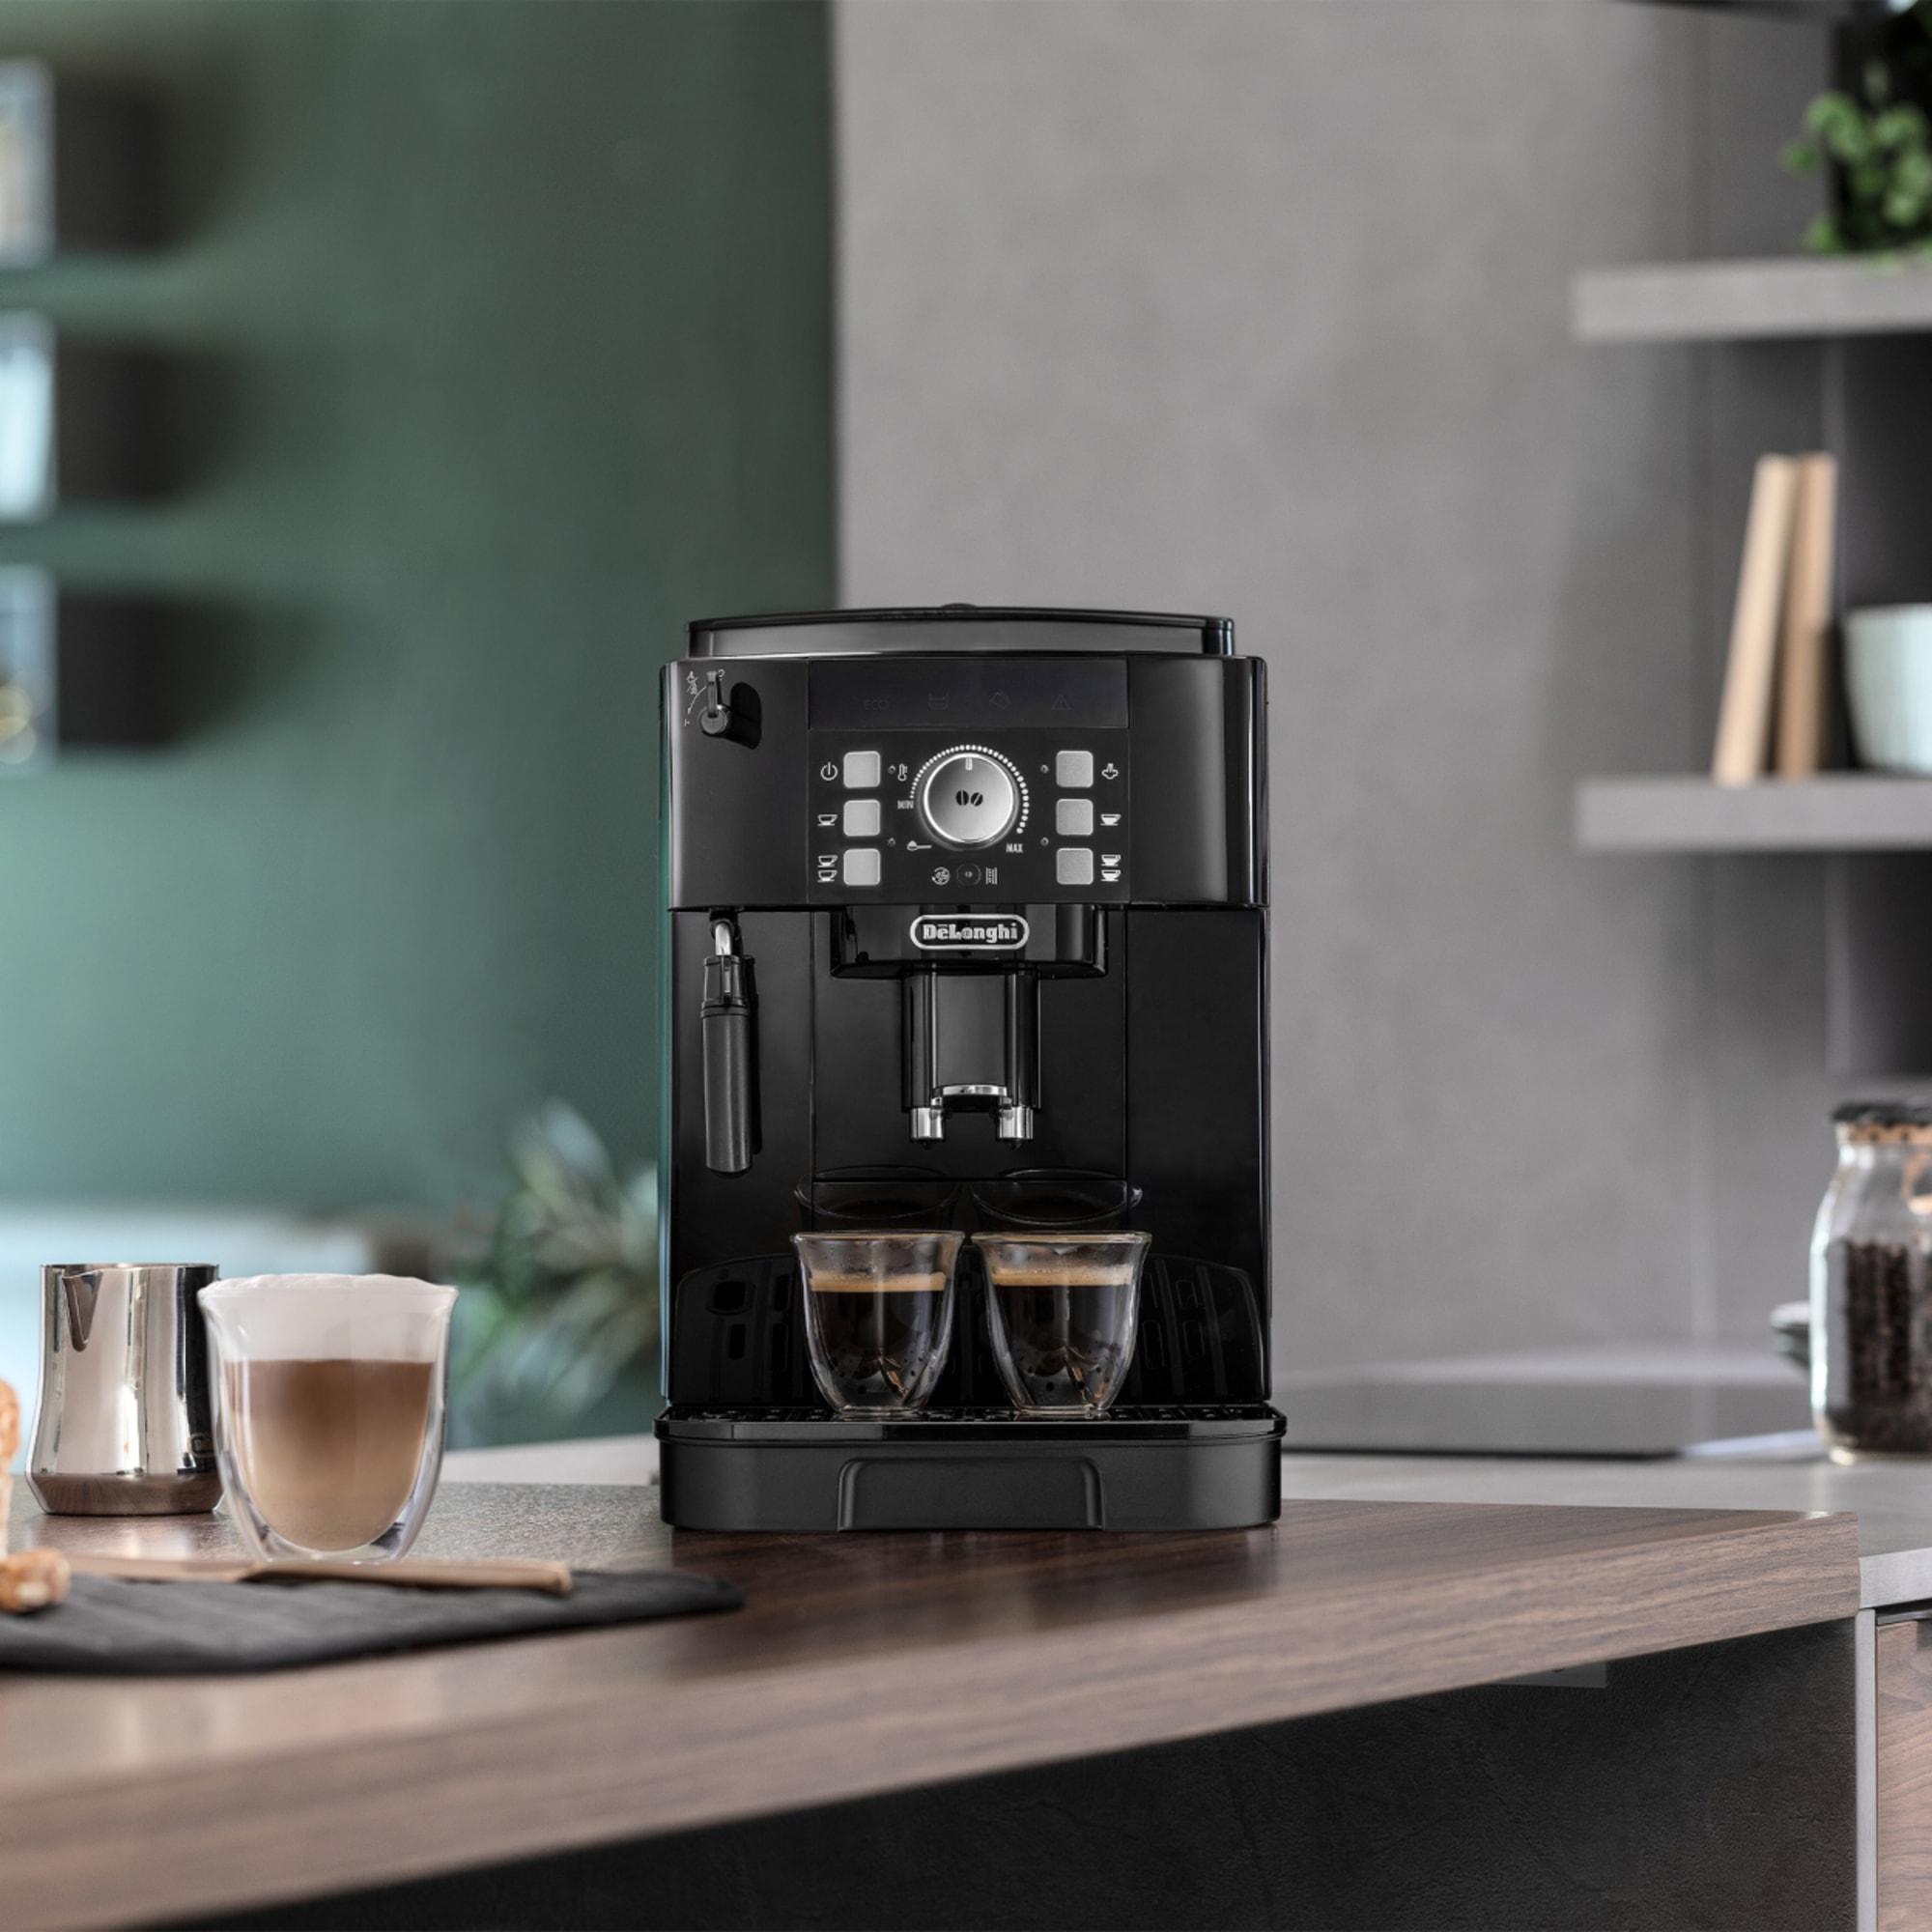 DeLonghi Magnifica Fully Automatic Coffee Machine Black Image 2